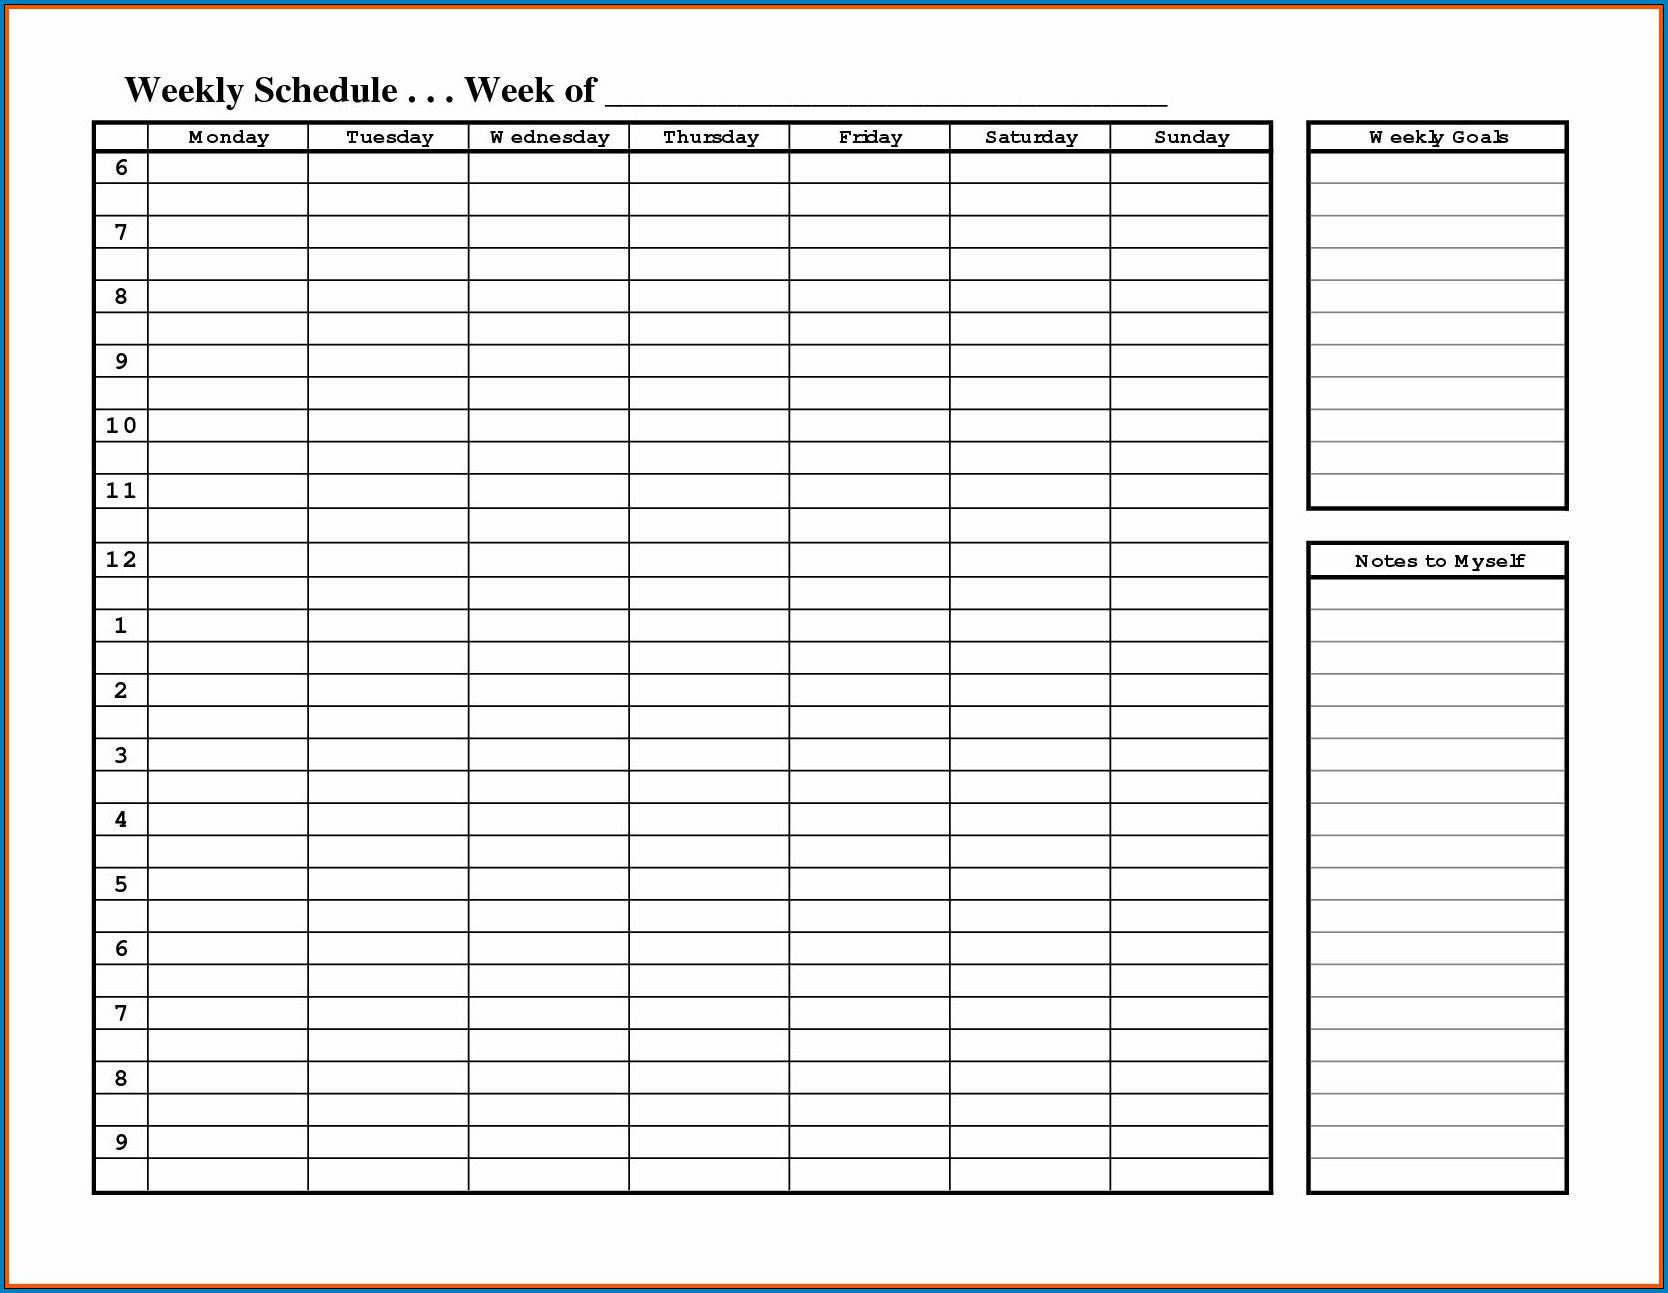 Example of Weekly Schedule Template Word